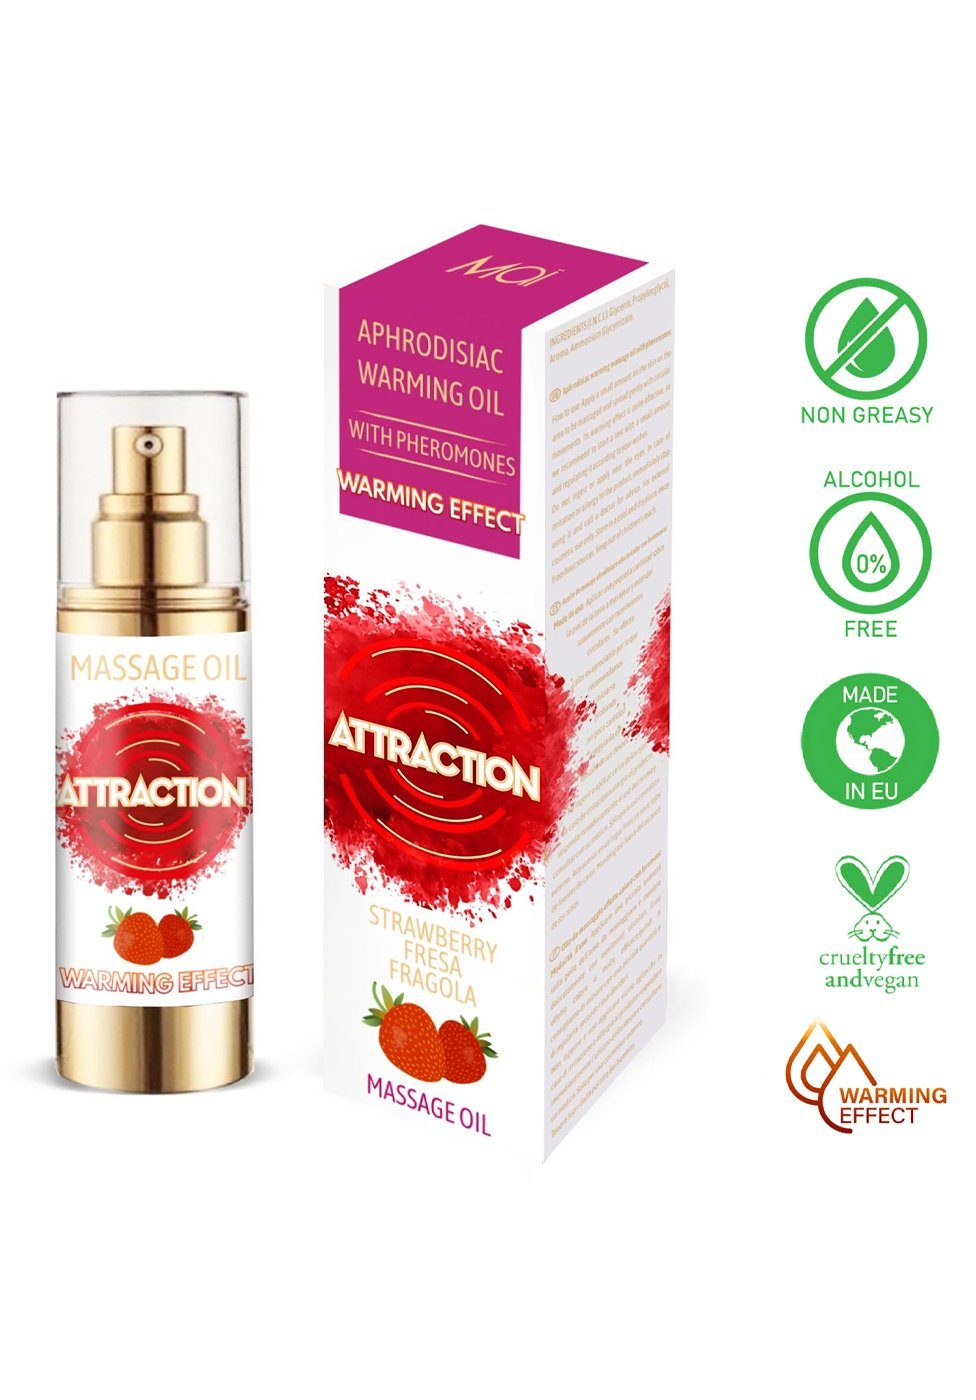 Massageöl Mai Massageöl Erdbeer Pheromon Cosmetics -